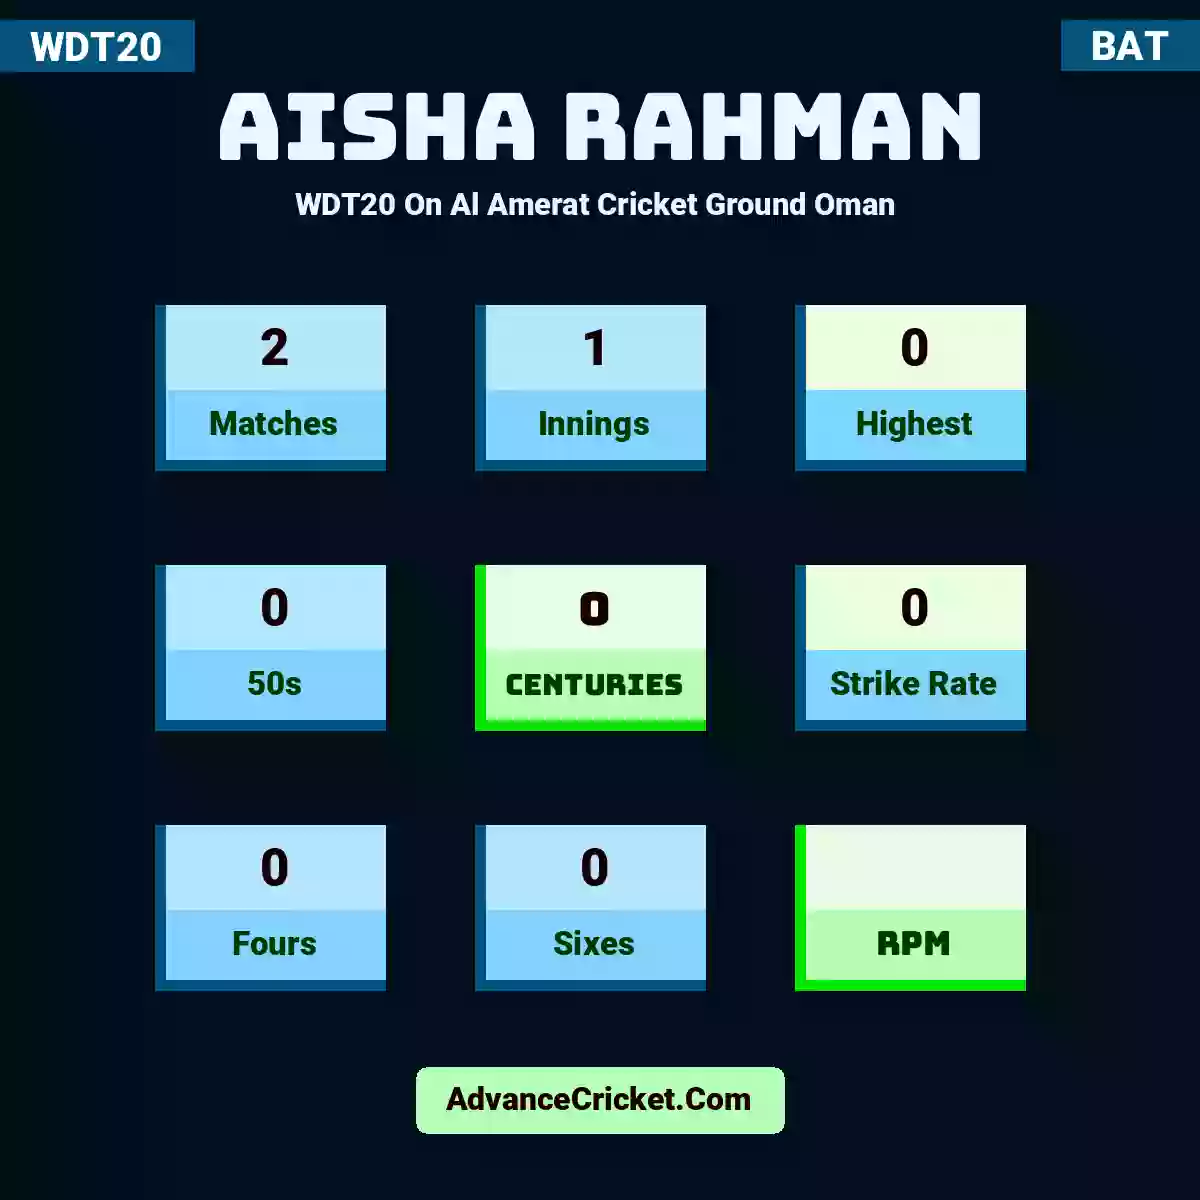 Aisha Rahman WDT20  On Al Amerat Cricket Ground Oman , Aisha Rahman played 2 matches, scored 0 runs as highest, 0 half-centuries, and 0 centuries, with a strike rate of 0. A.Rahman hit 0 fours and 0 sixes.